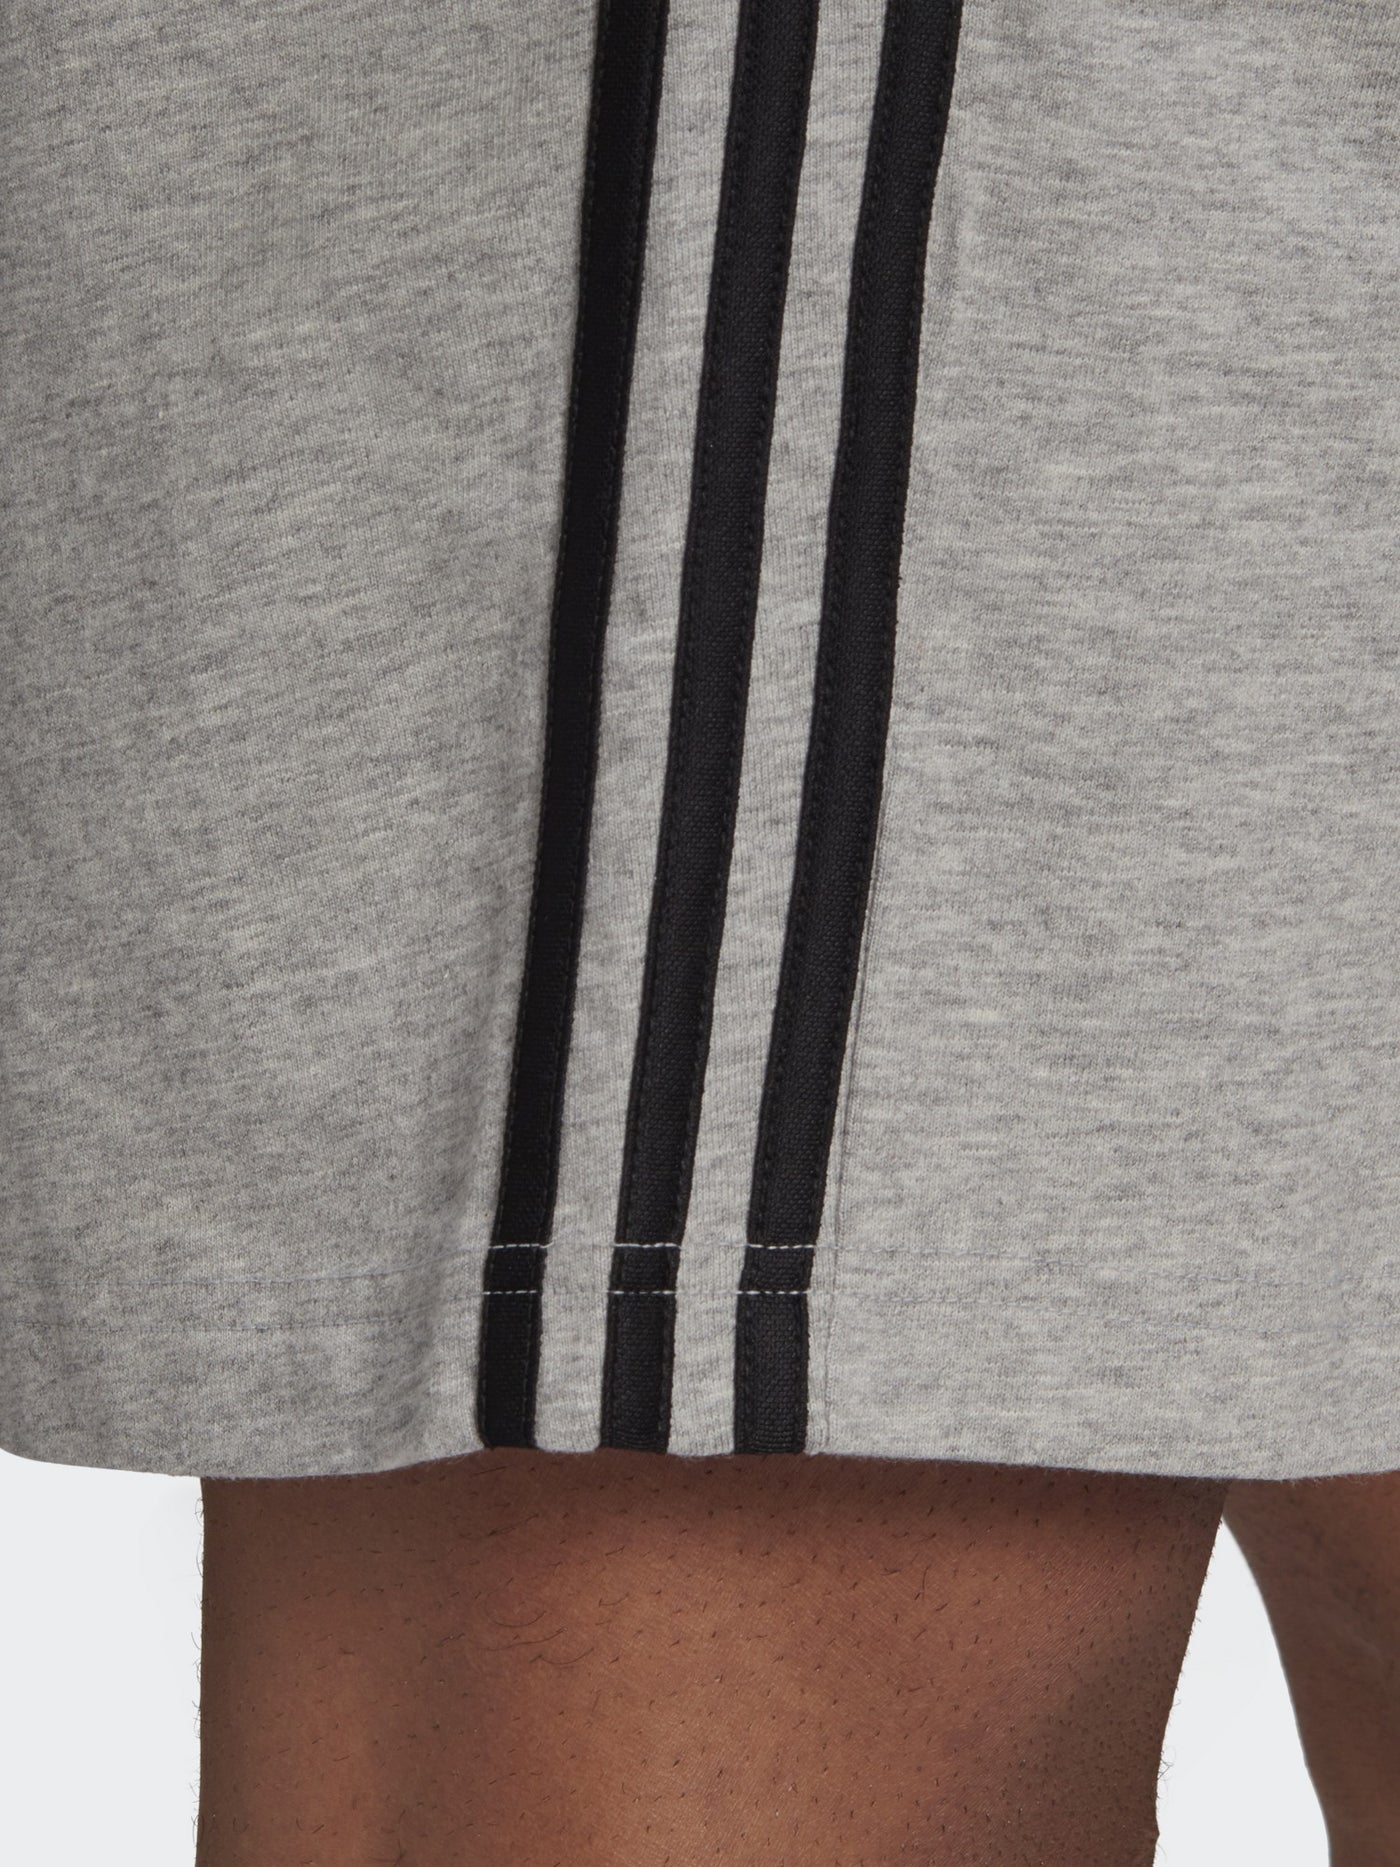 adidas Men's AEROREADY Essentials 3-Stripes Shorts - GK9990